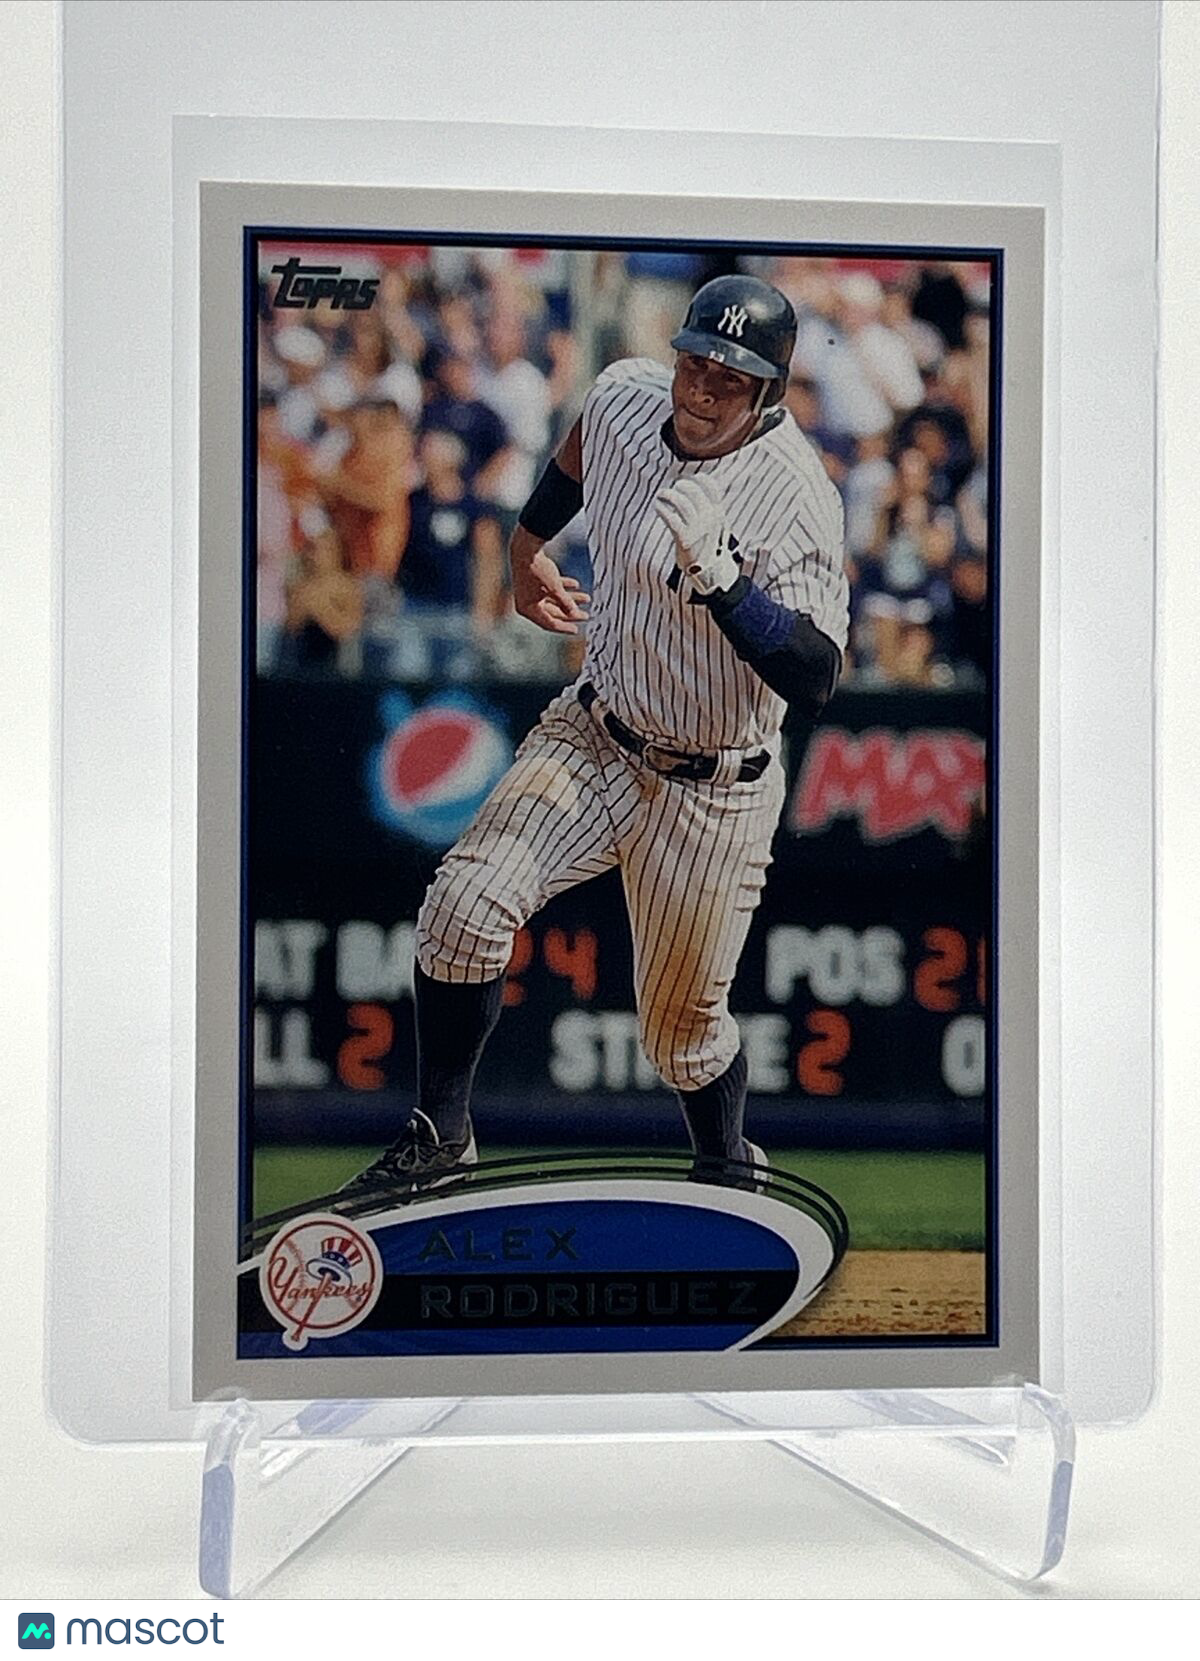 2012 Topps Alex Rodriguez Baseball Card #500 Mint FREE SHIPPING